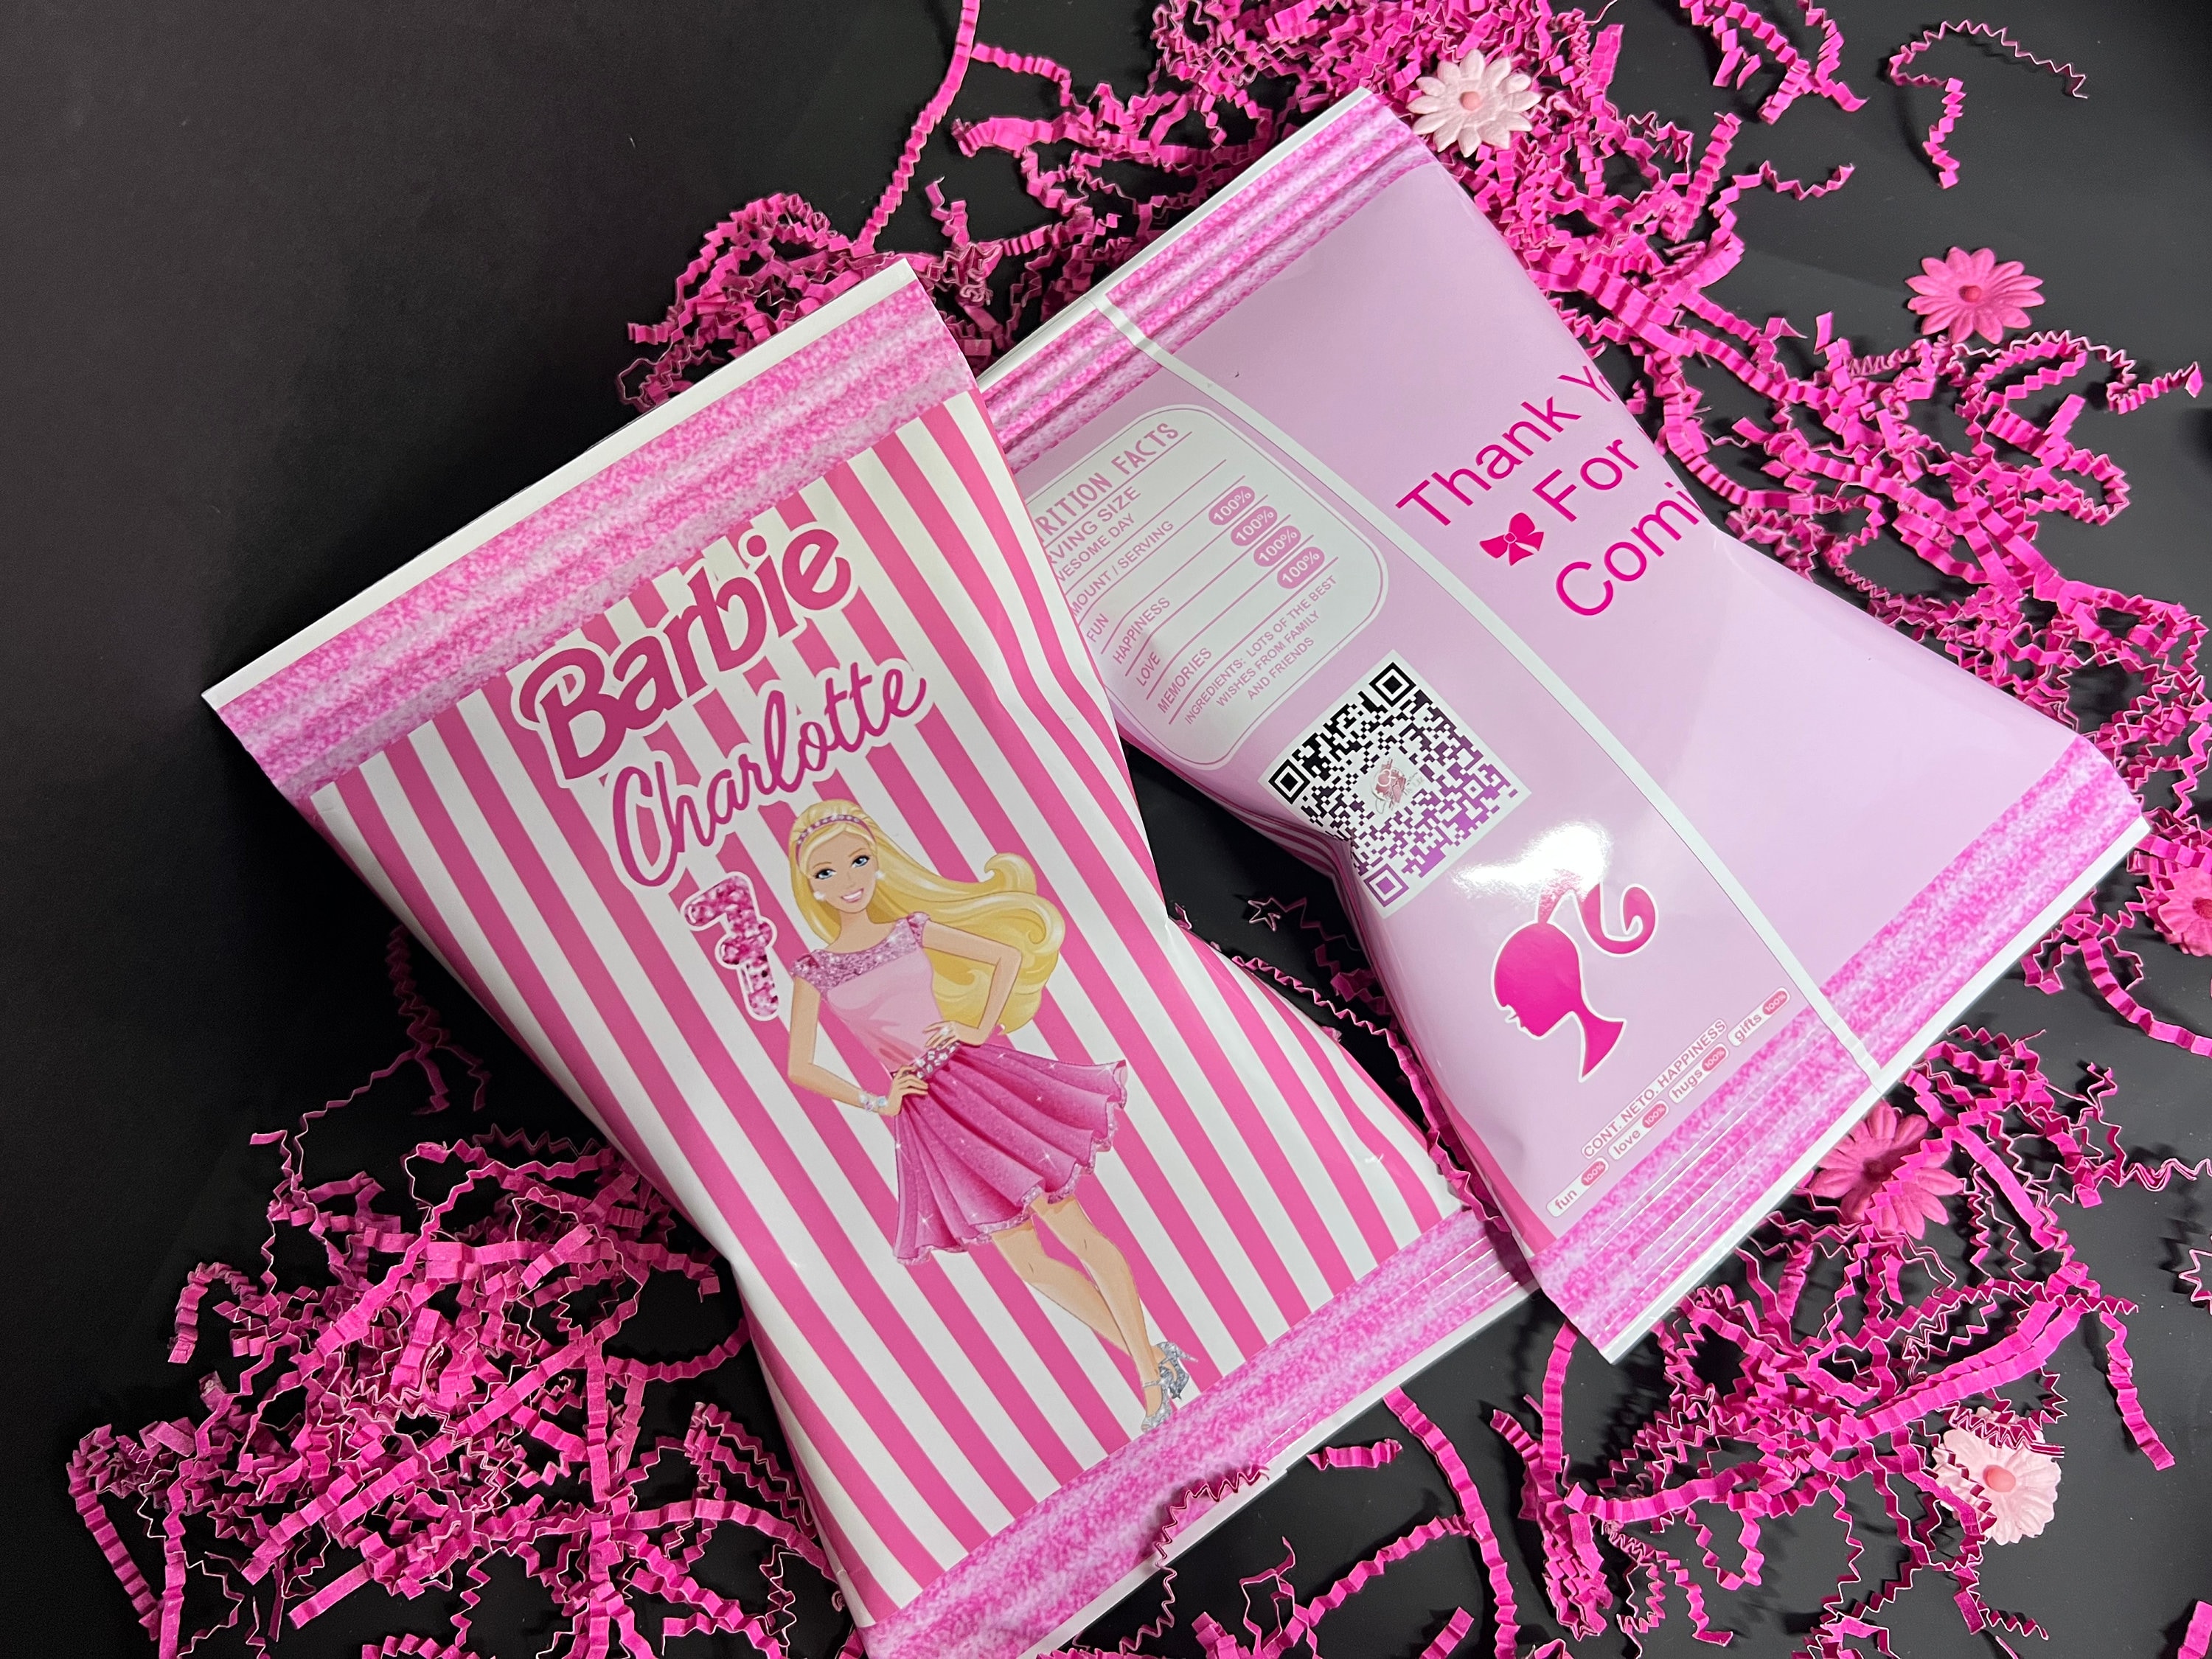 Barbie themed Pre-Assembled Chip Bag 🌸💓💕 * * Templates